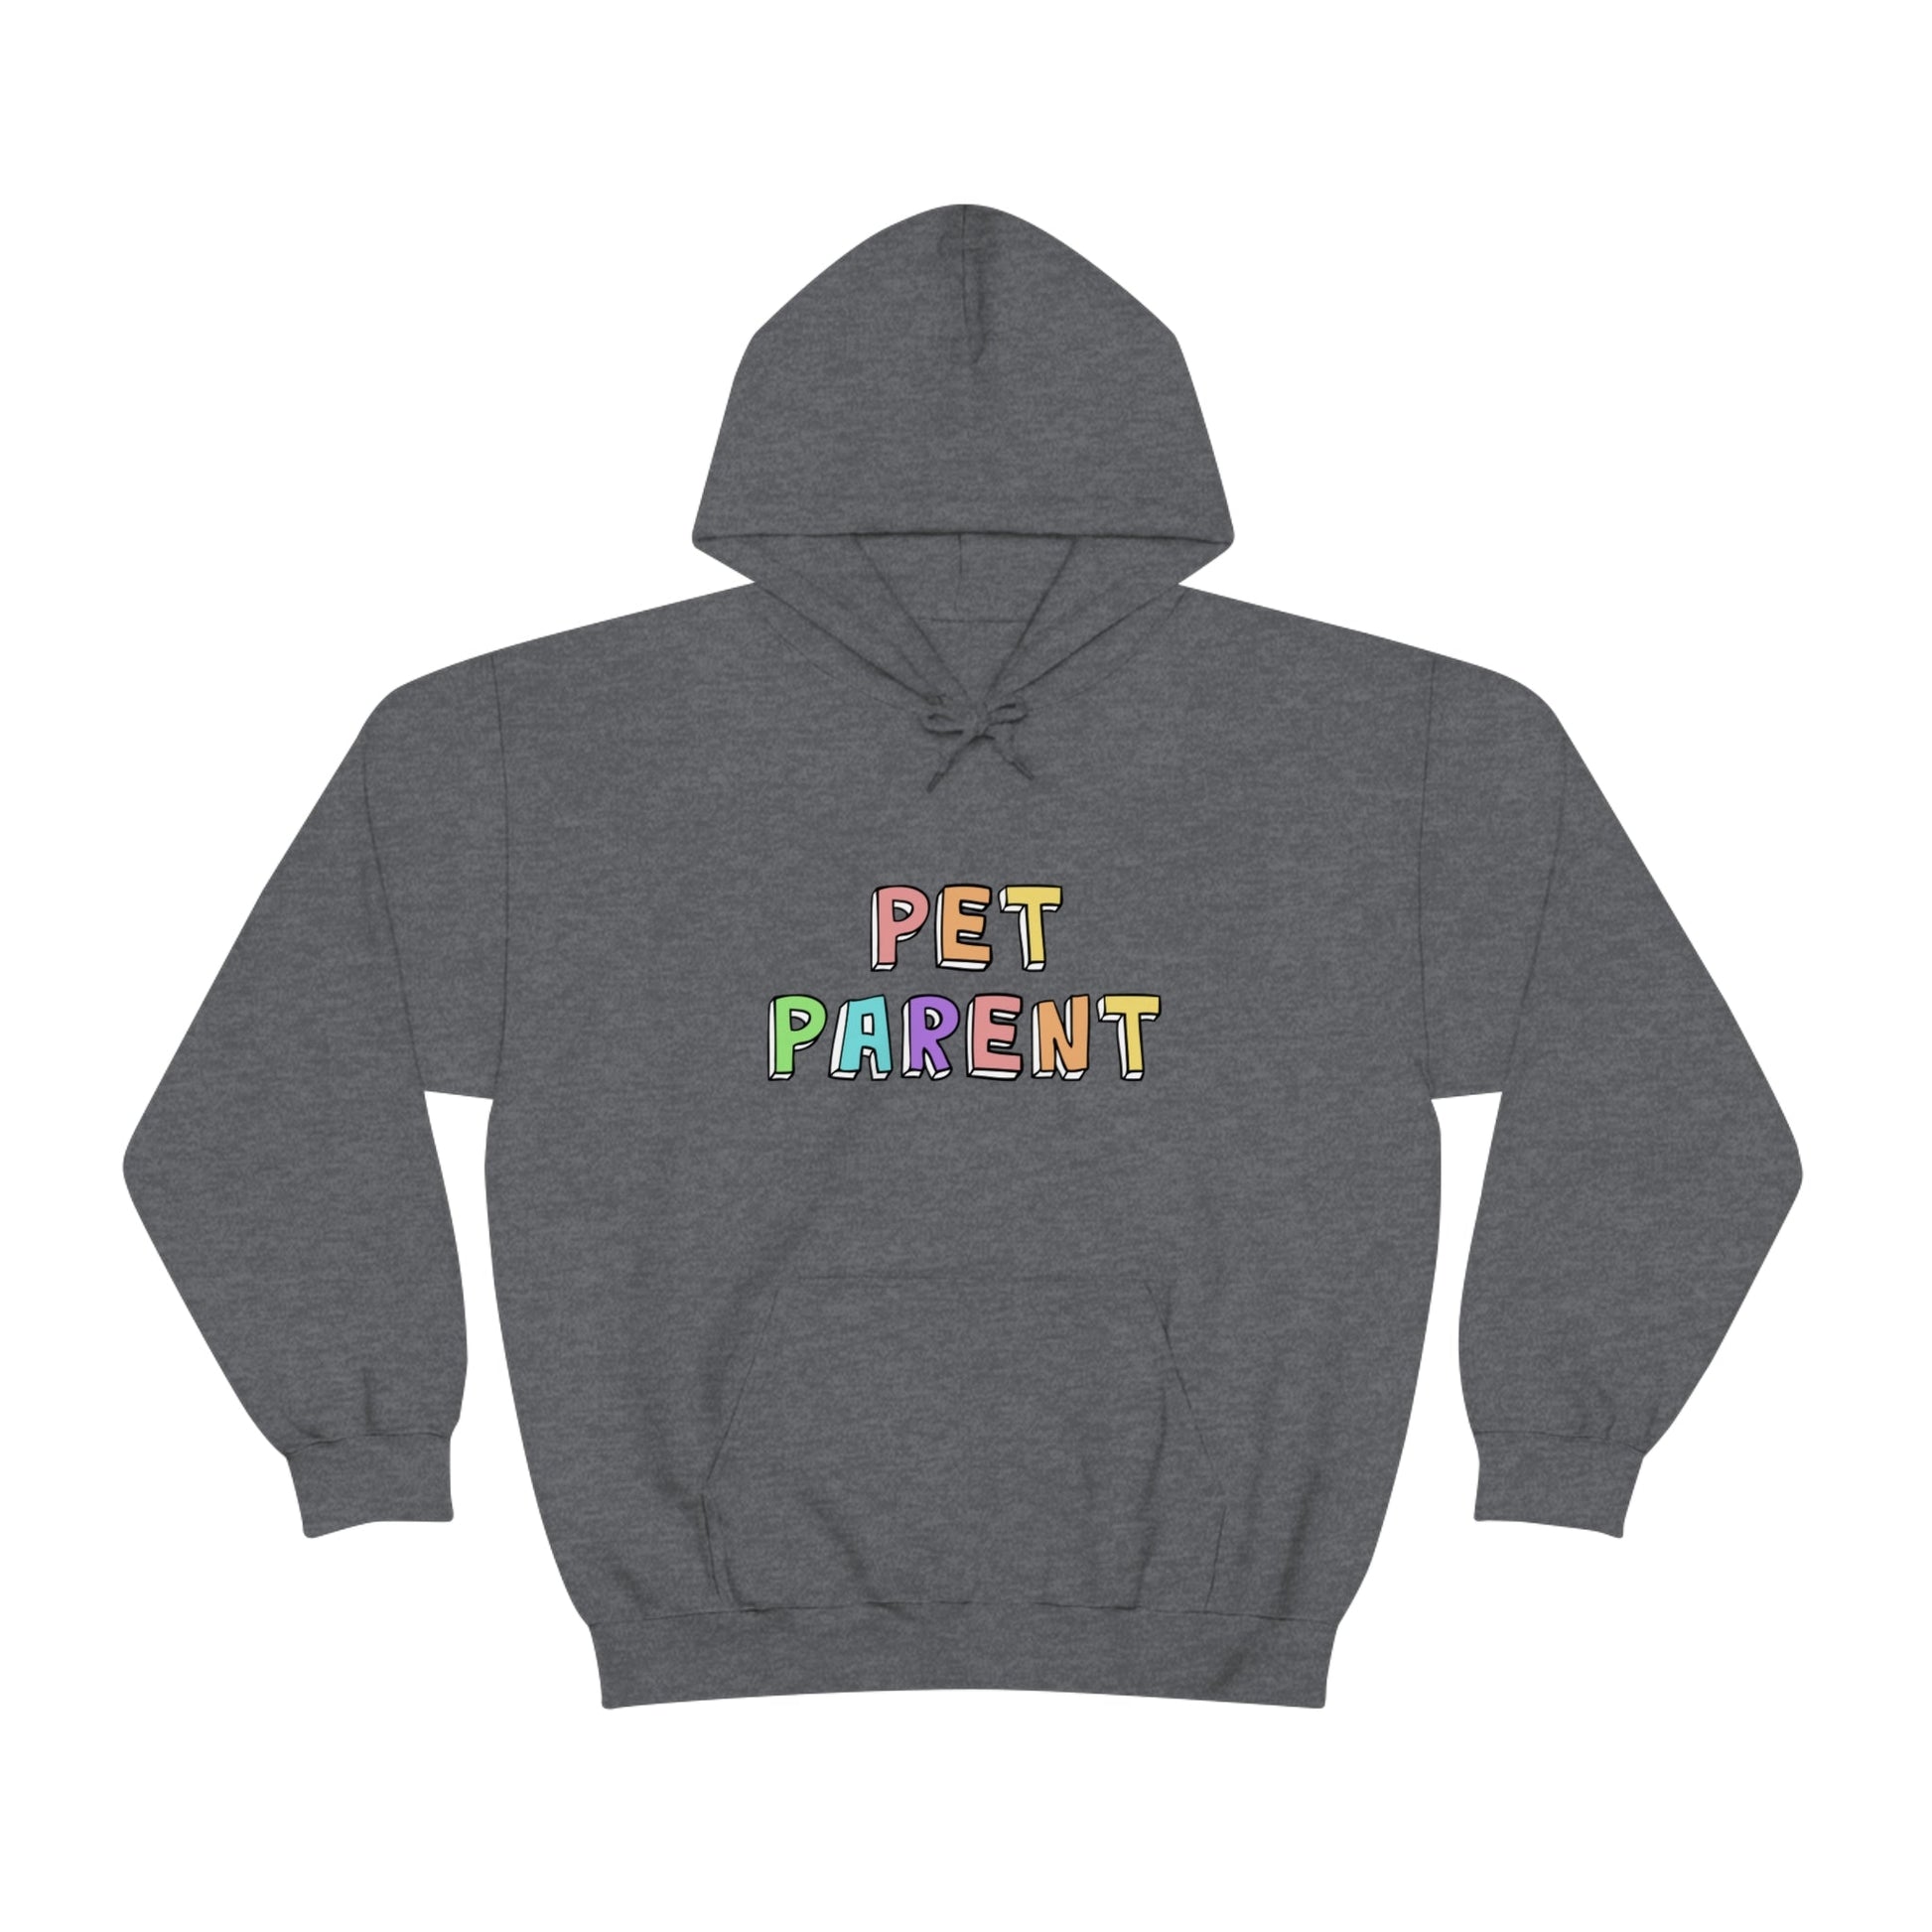 Pet Parent | Hooded Sweatshirt - Detezi Designs-30257273943479008889